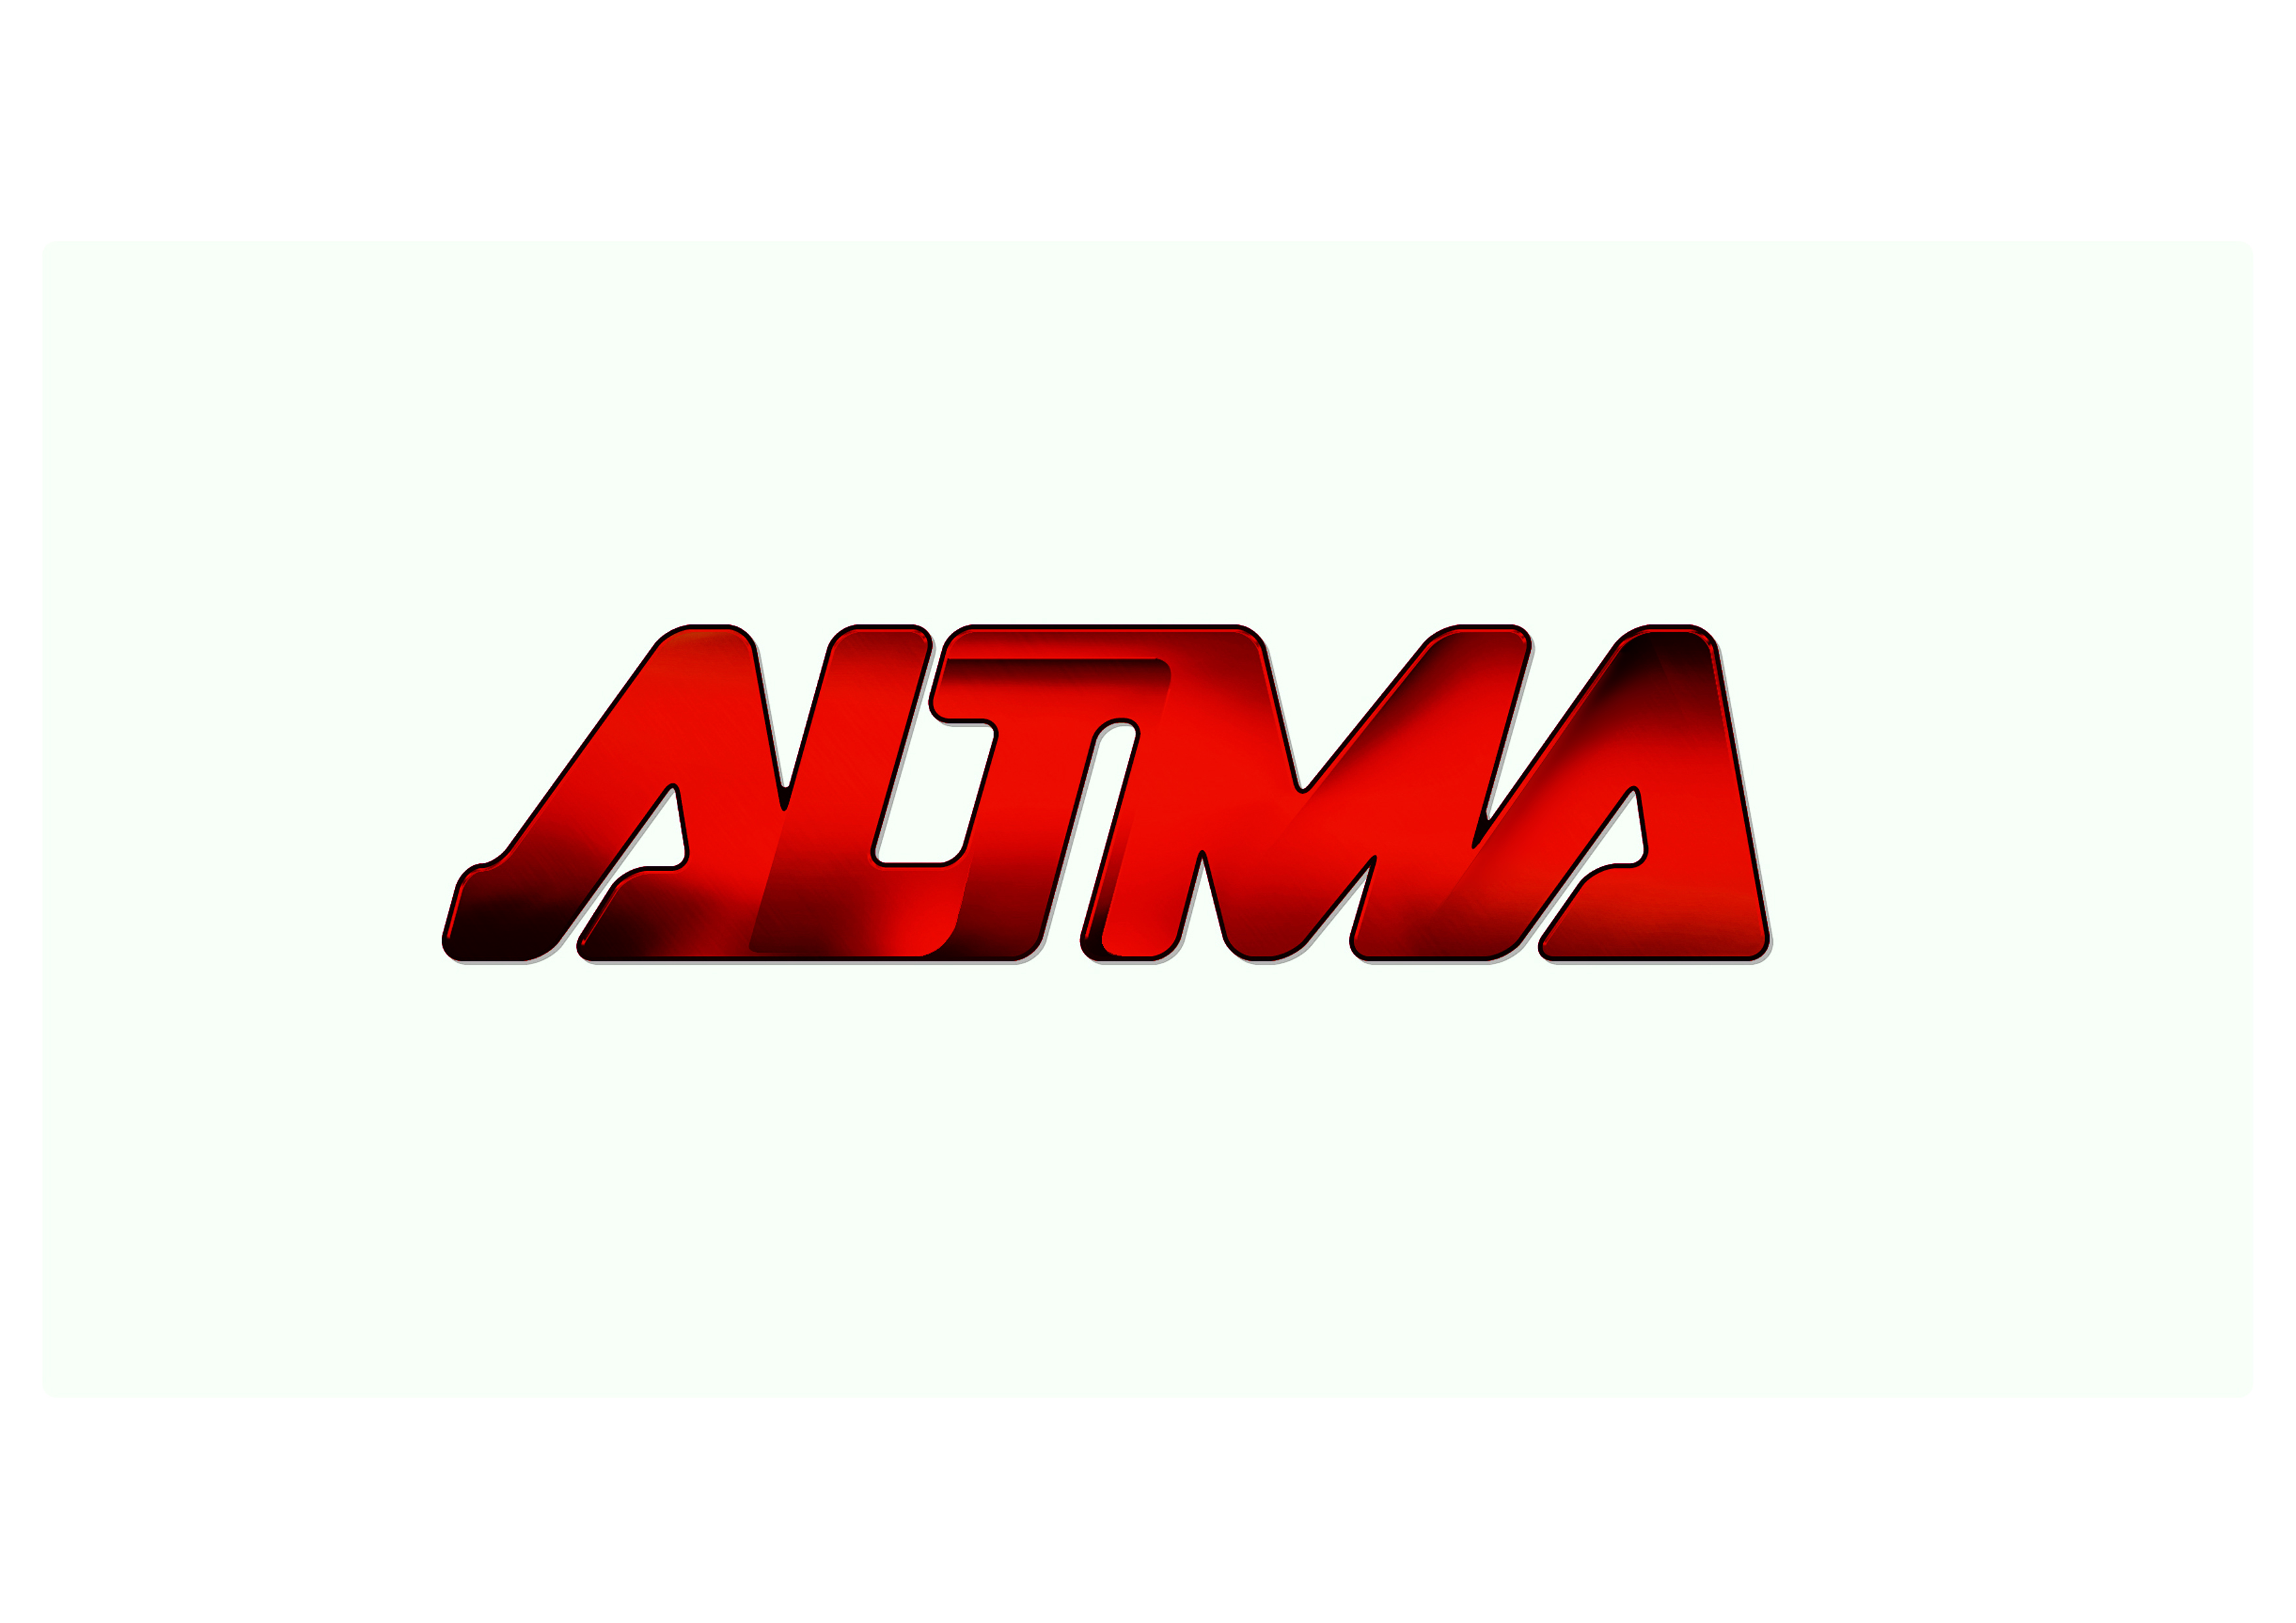 Dalian Altma Co, Ltd